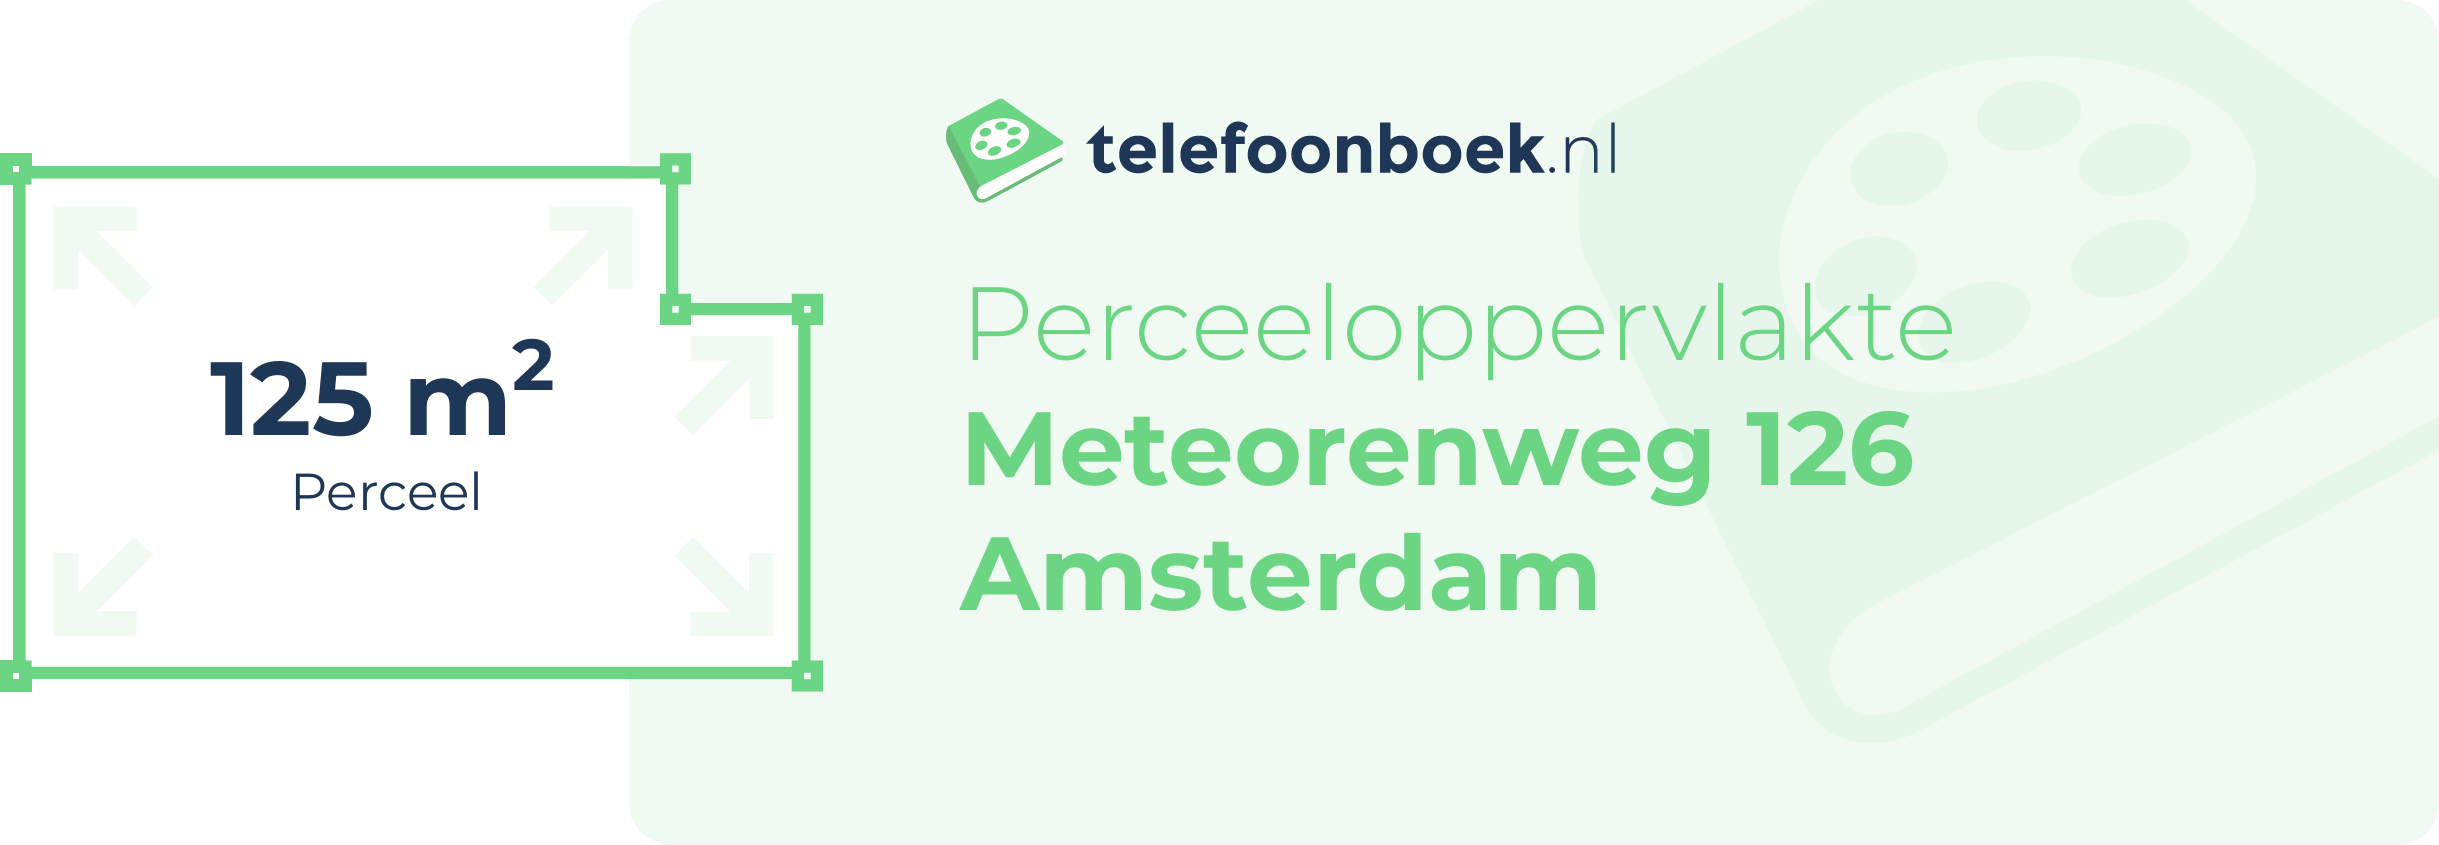 Perceeloppervlakte Meteorenweg 126 Amsterdam